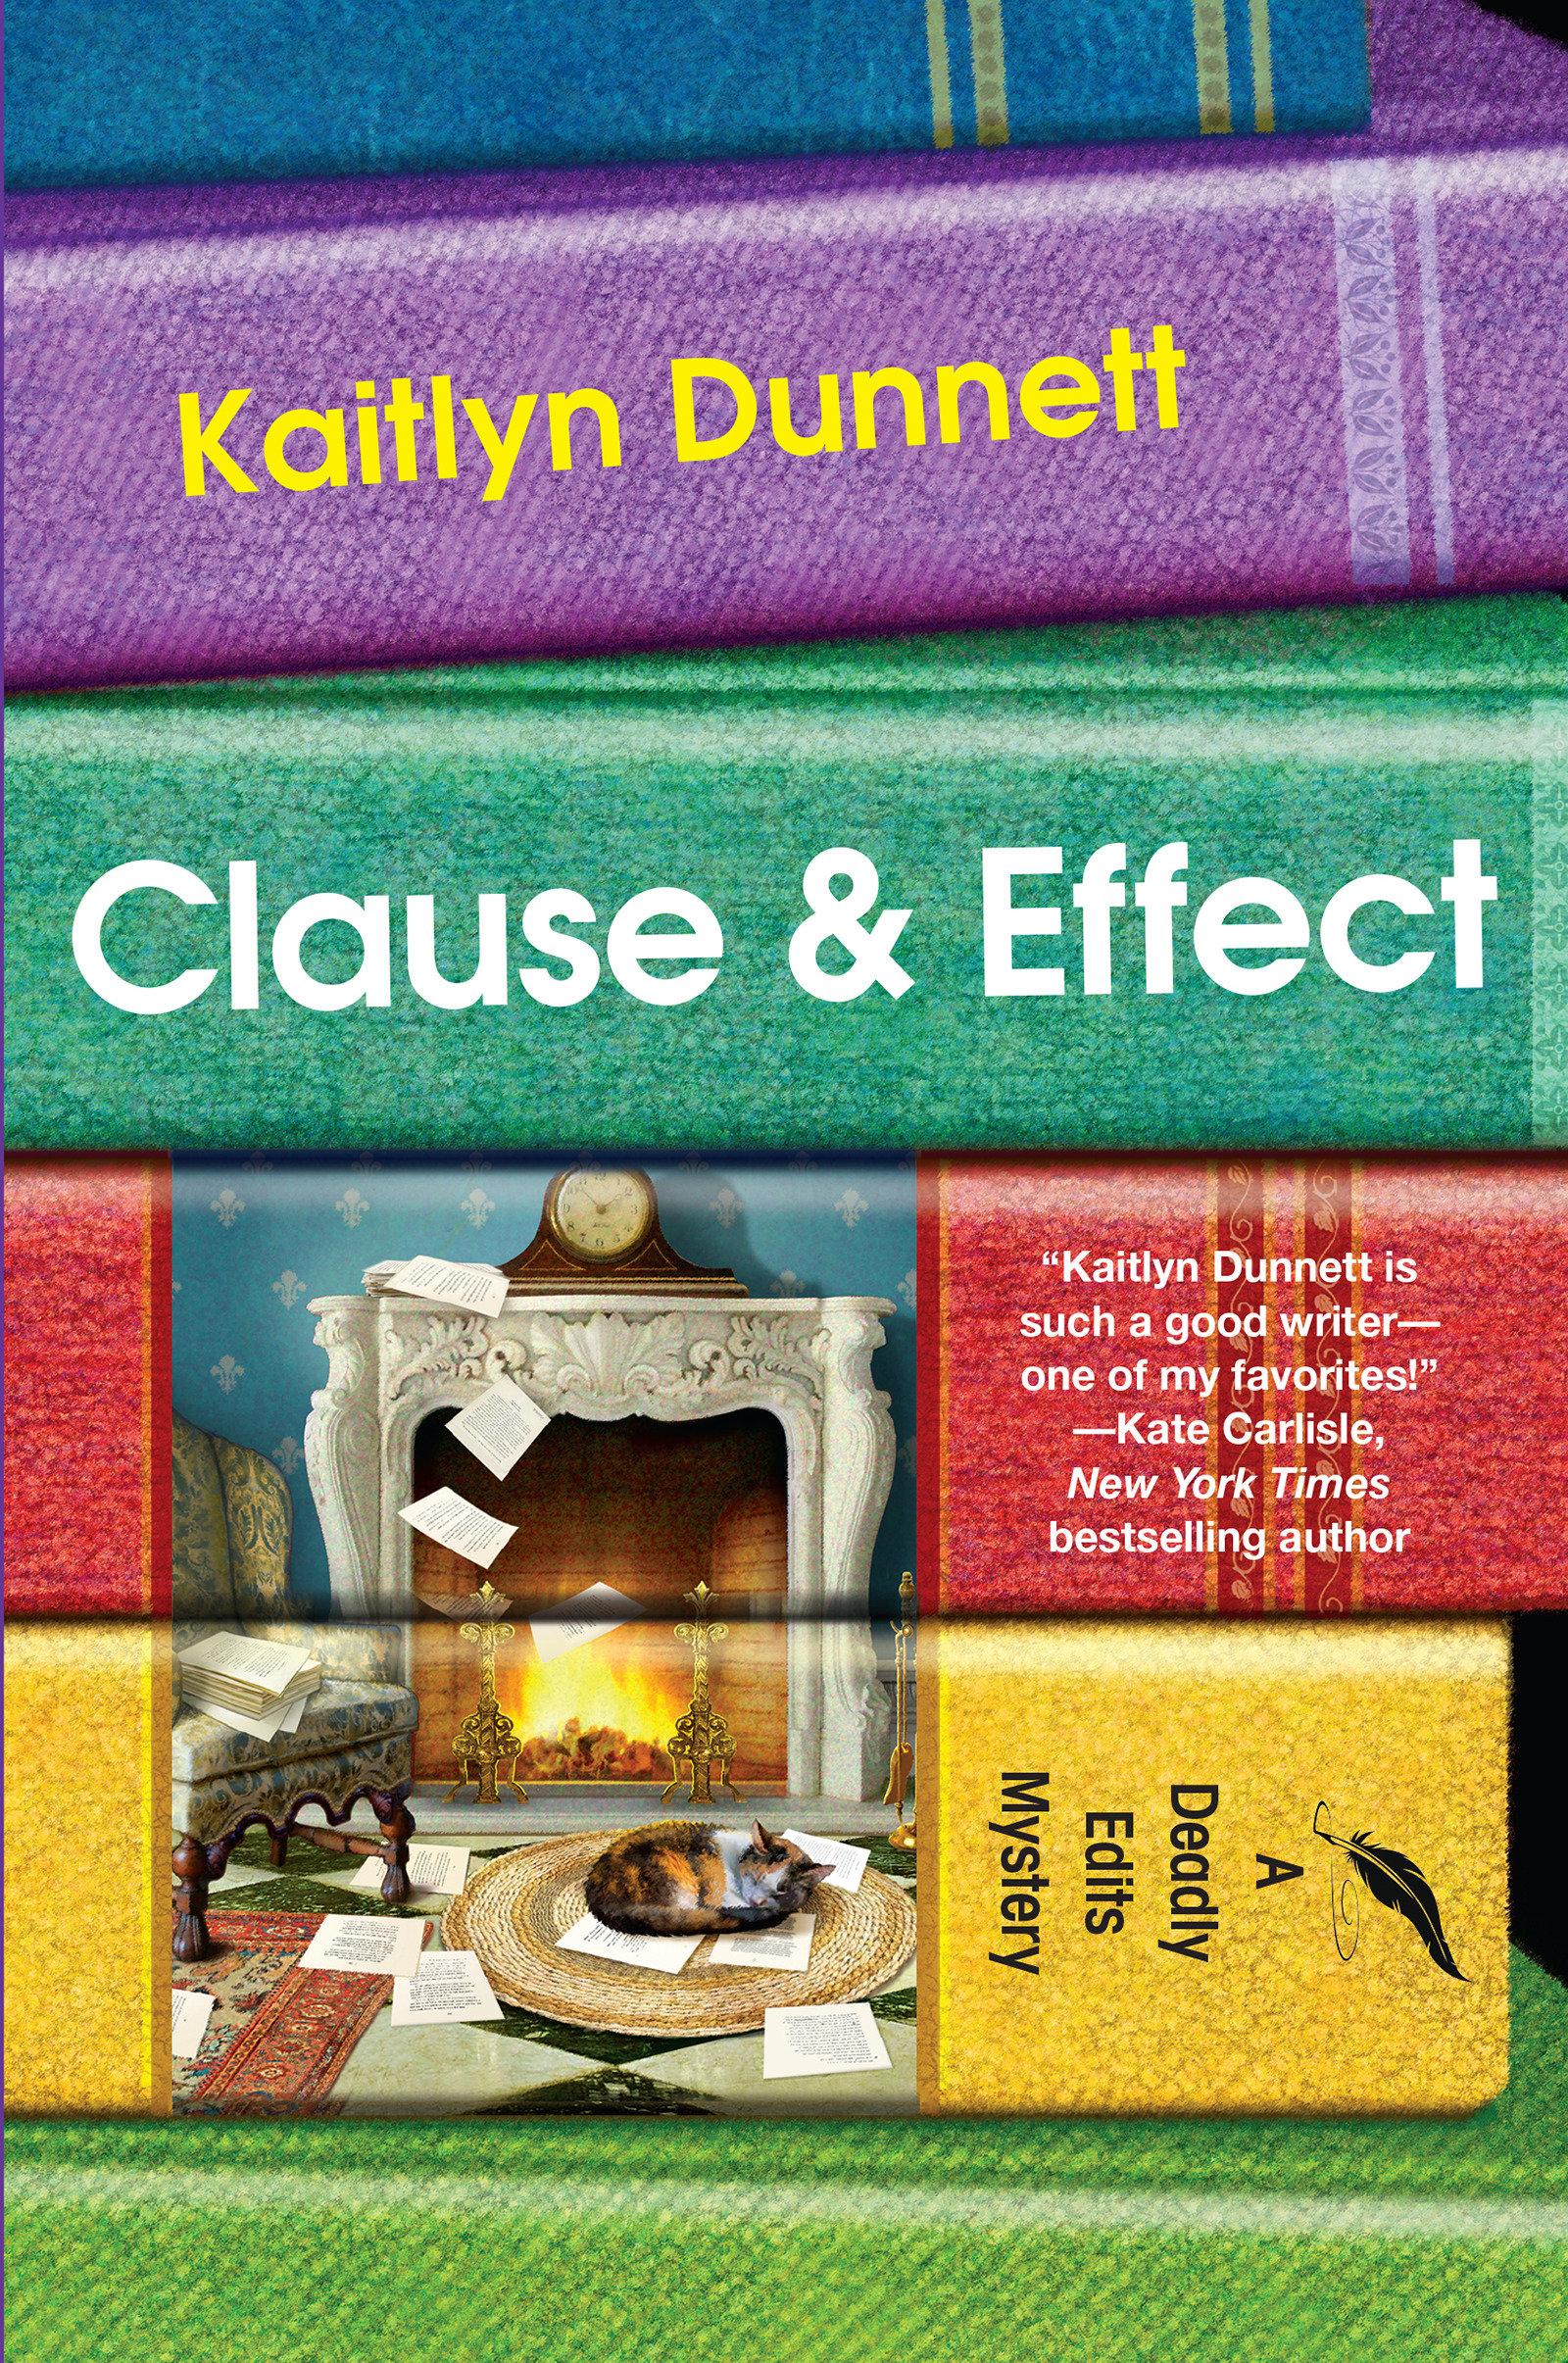 Clause & Effect - Kaitlyn Dunnett